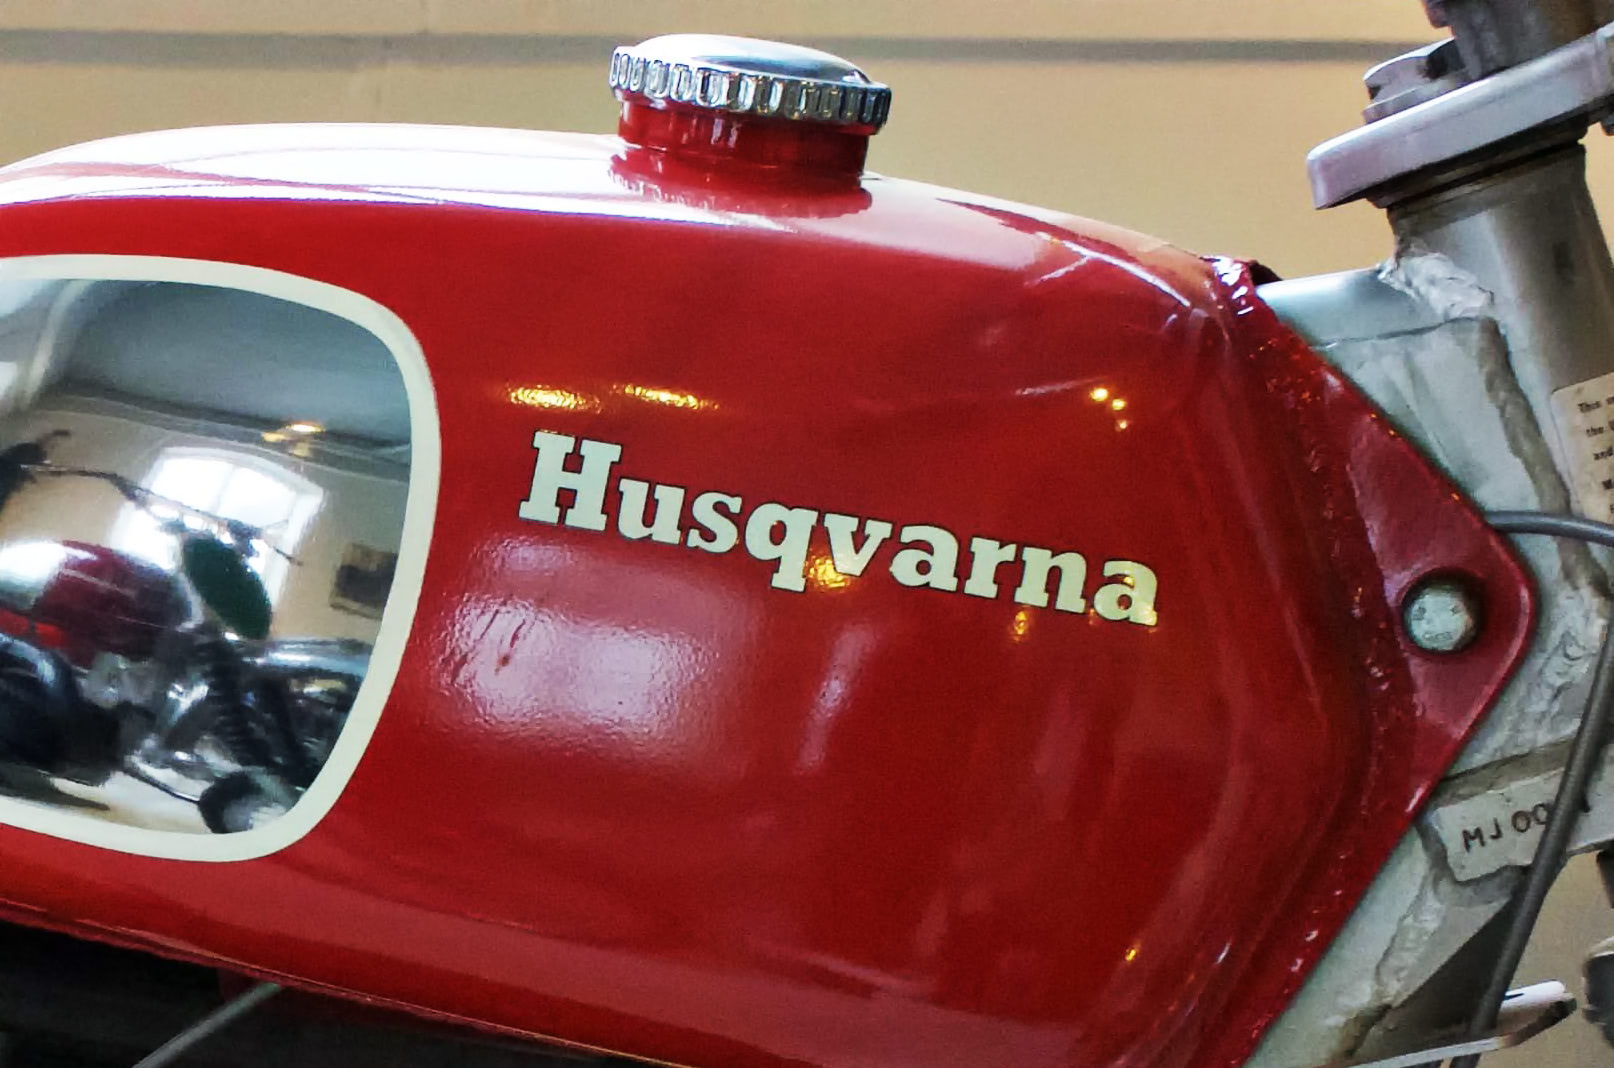 motorcycle Husqvarna logos